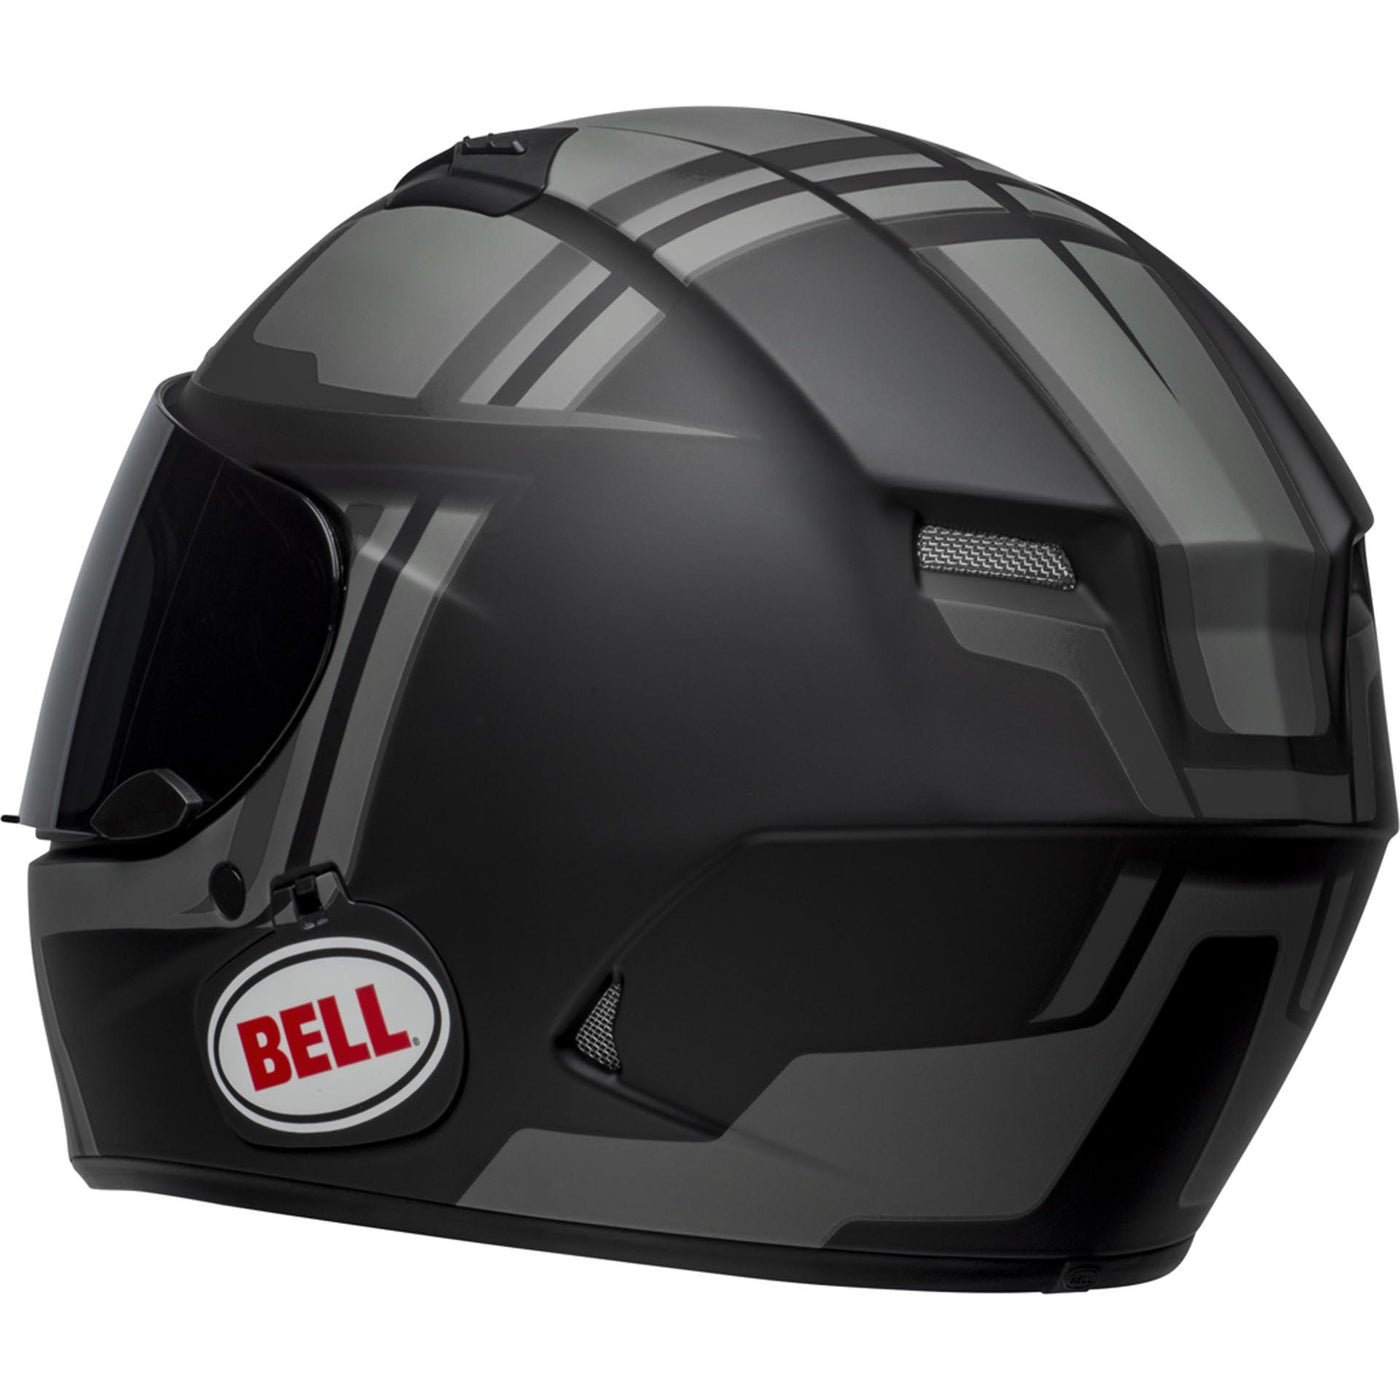 Bell Qualifier DLX MIPS Motorcycle Full Face Helmet Torque Matte Black/Gray